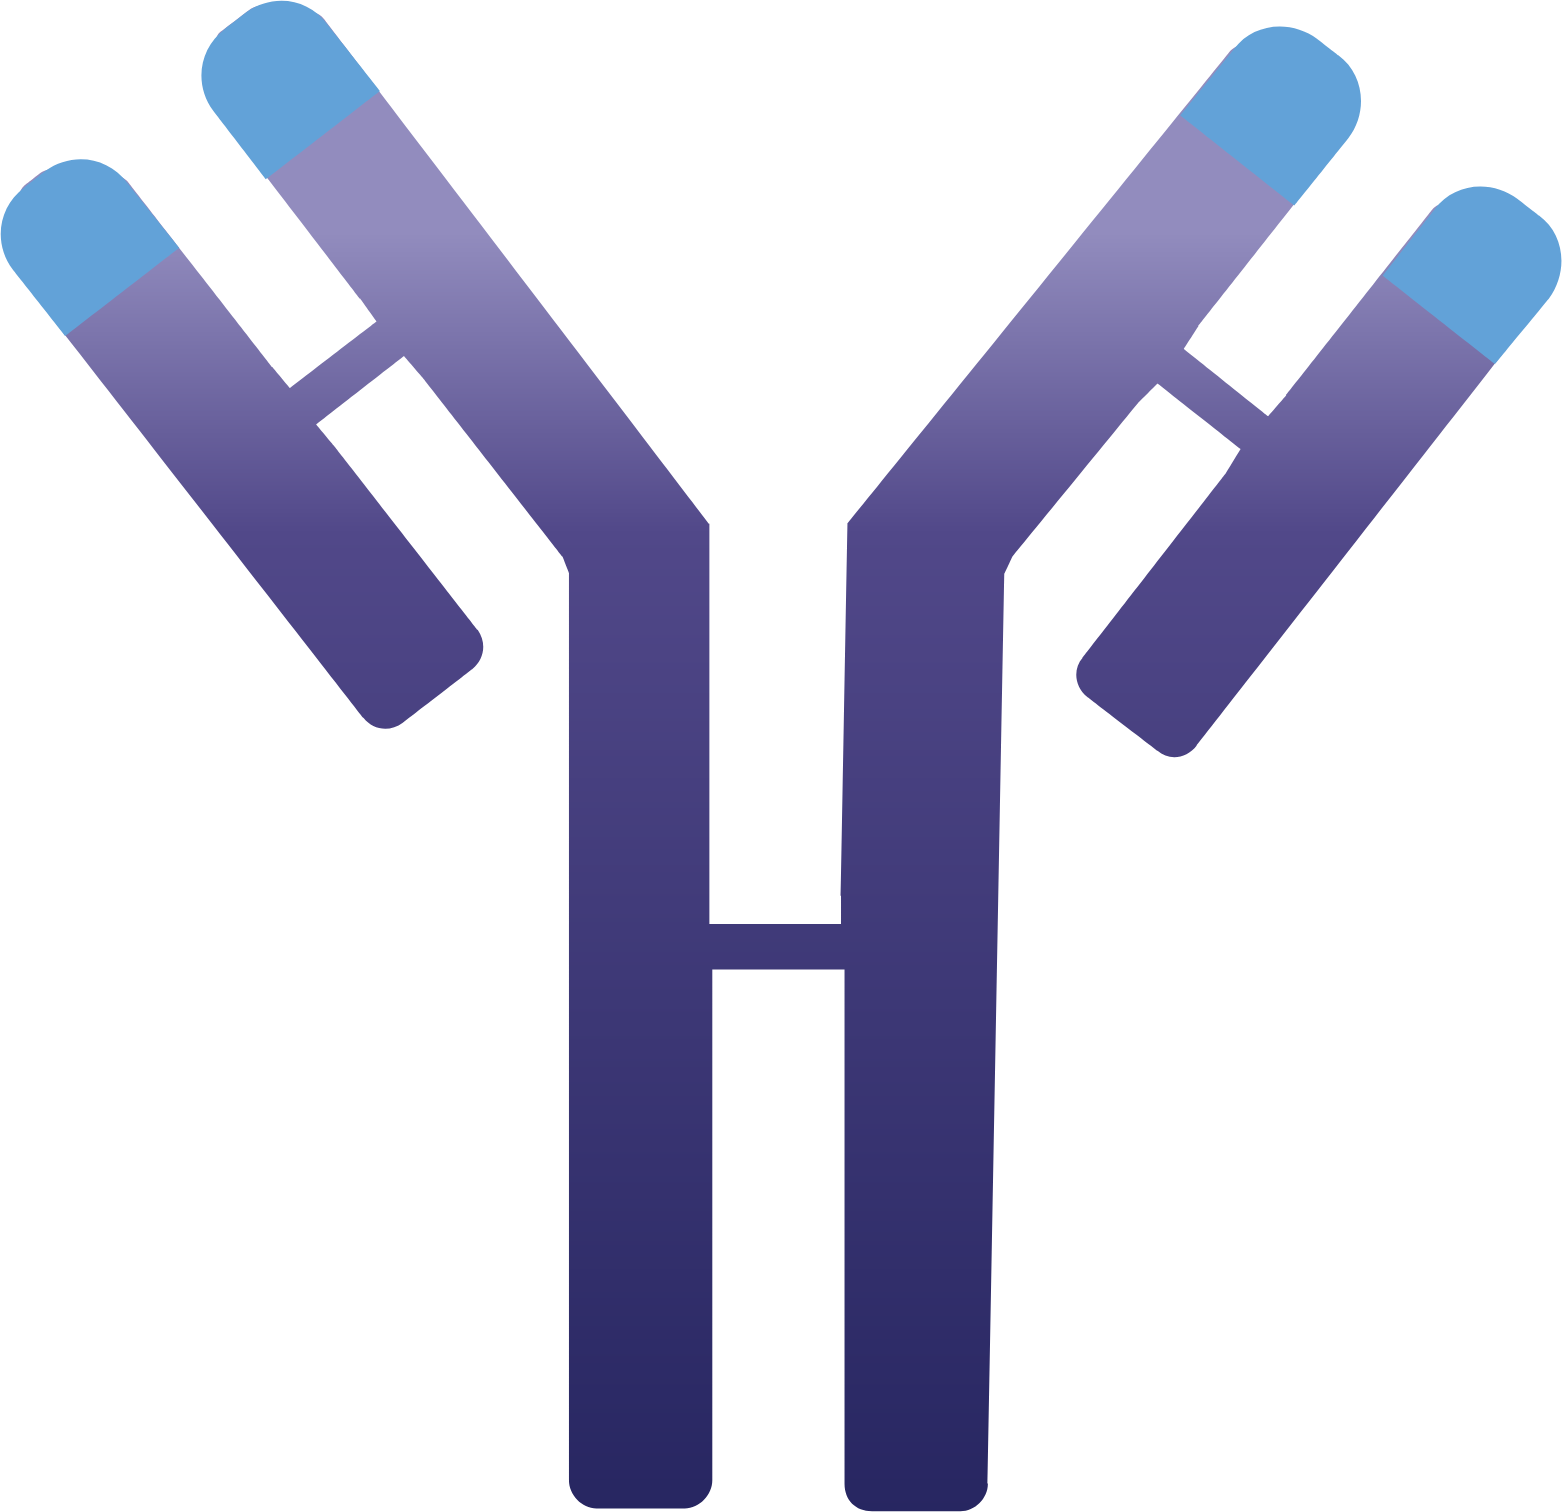 Immunovant logo (transparent PNG)